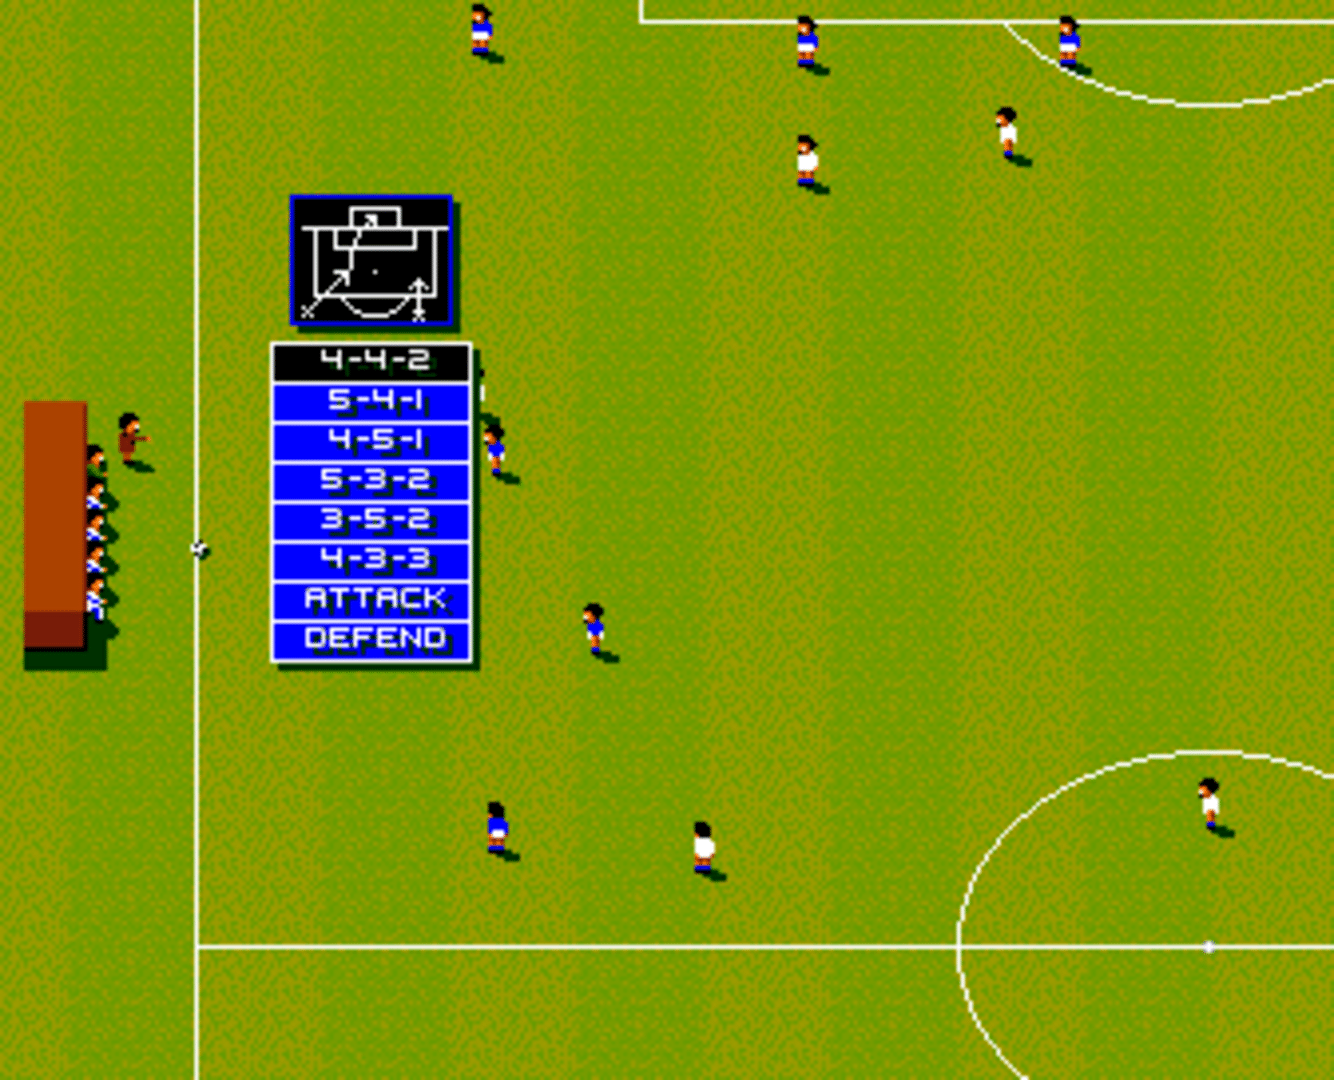 Sensible Soccer: European Champions - 92/93 Edition screenshot